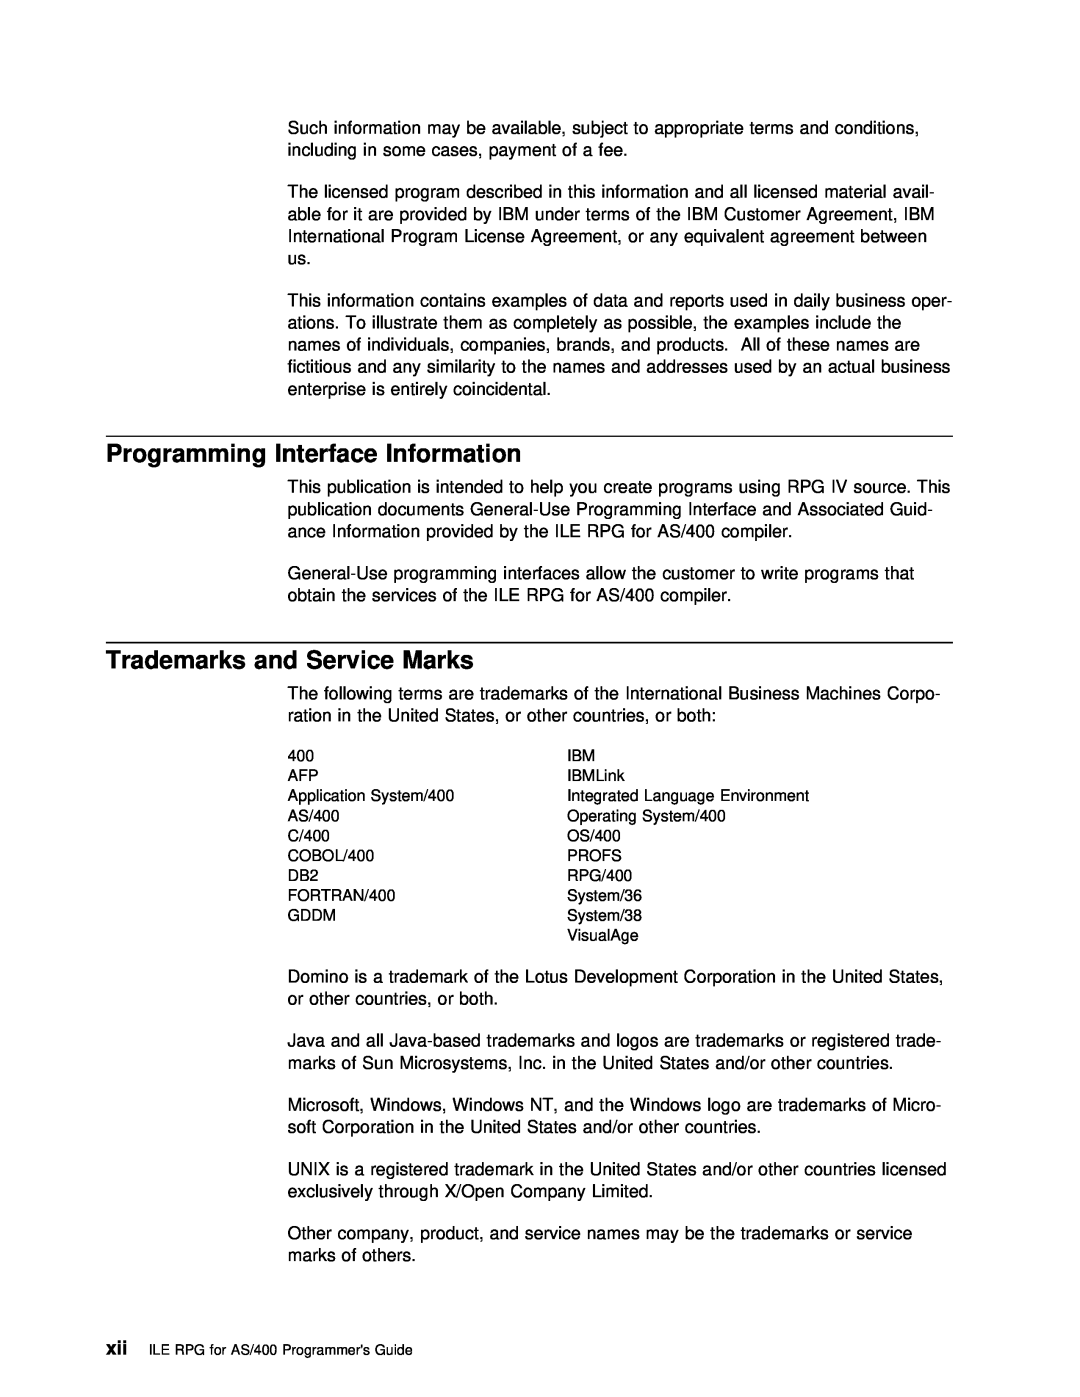 IBM AS/400 manual Programming Interface Information, Trademarks and Service 